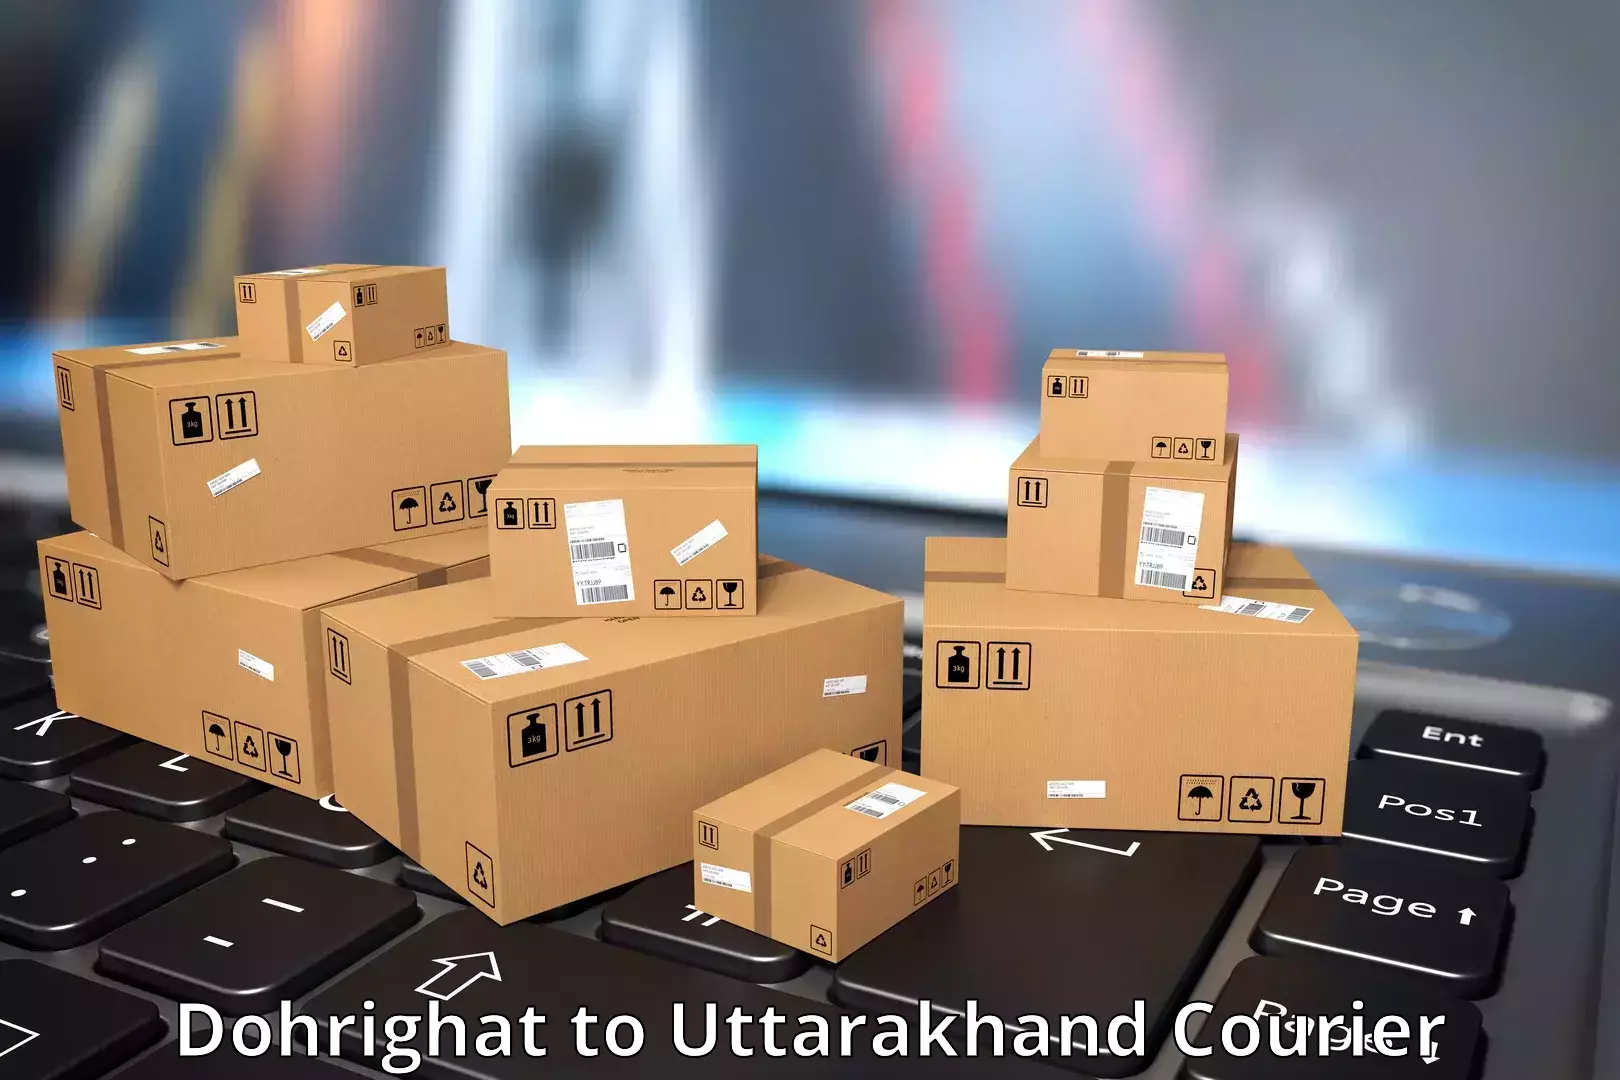 Global logistics network Dohrighat to Rishikesh